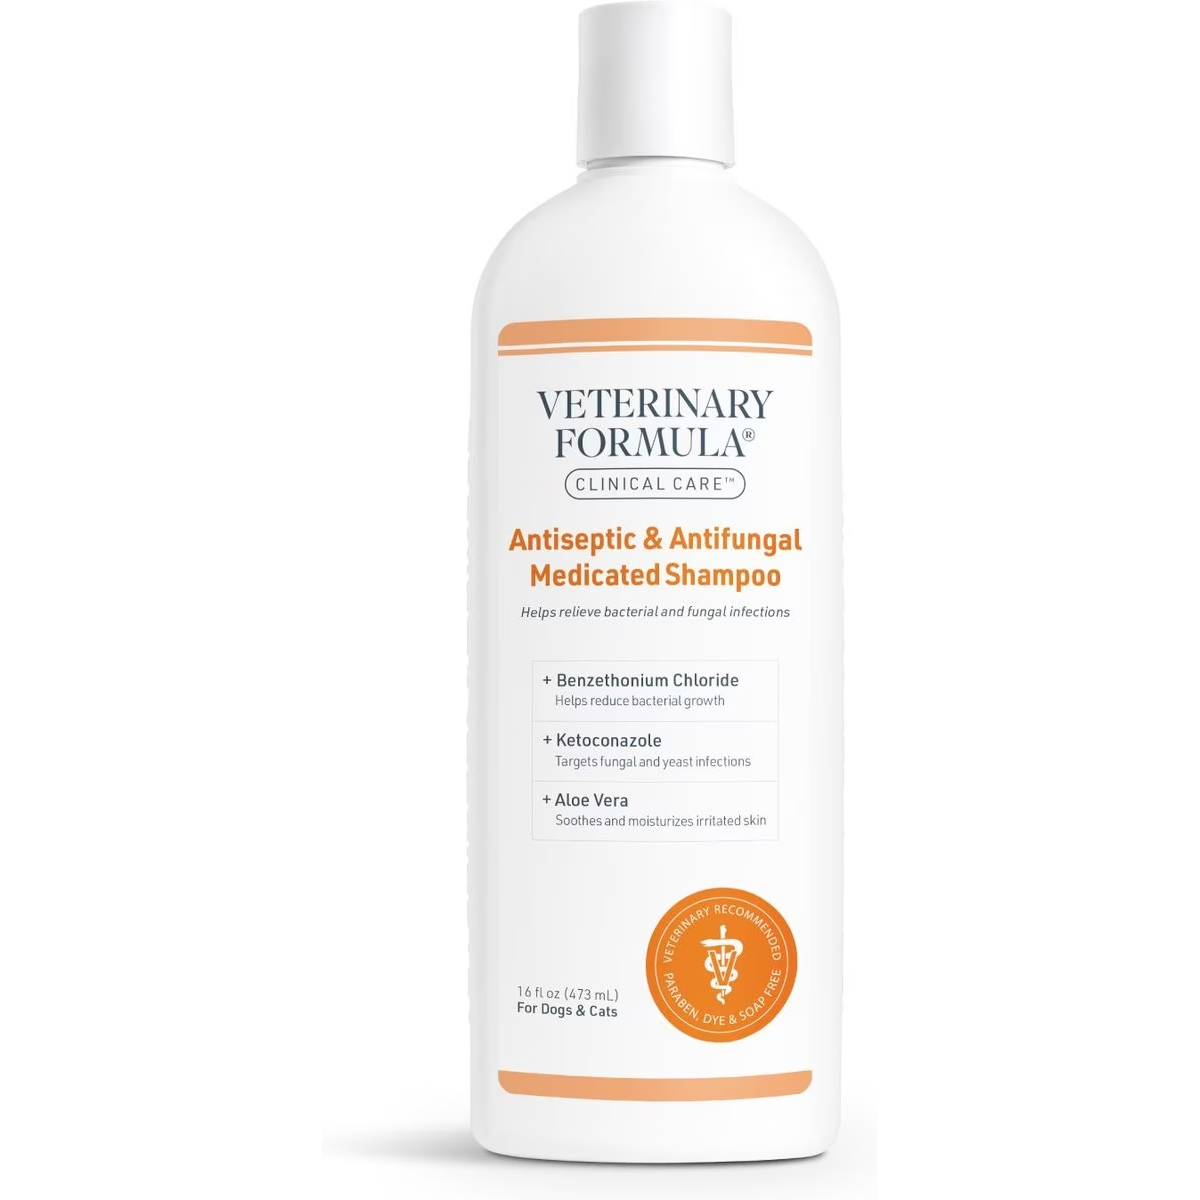 Veterinary Formula Clinical Care Antiseptic & Antifungal Medicated Shampoo 